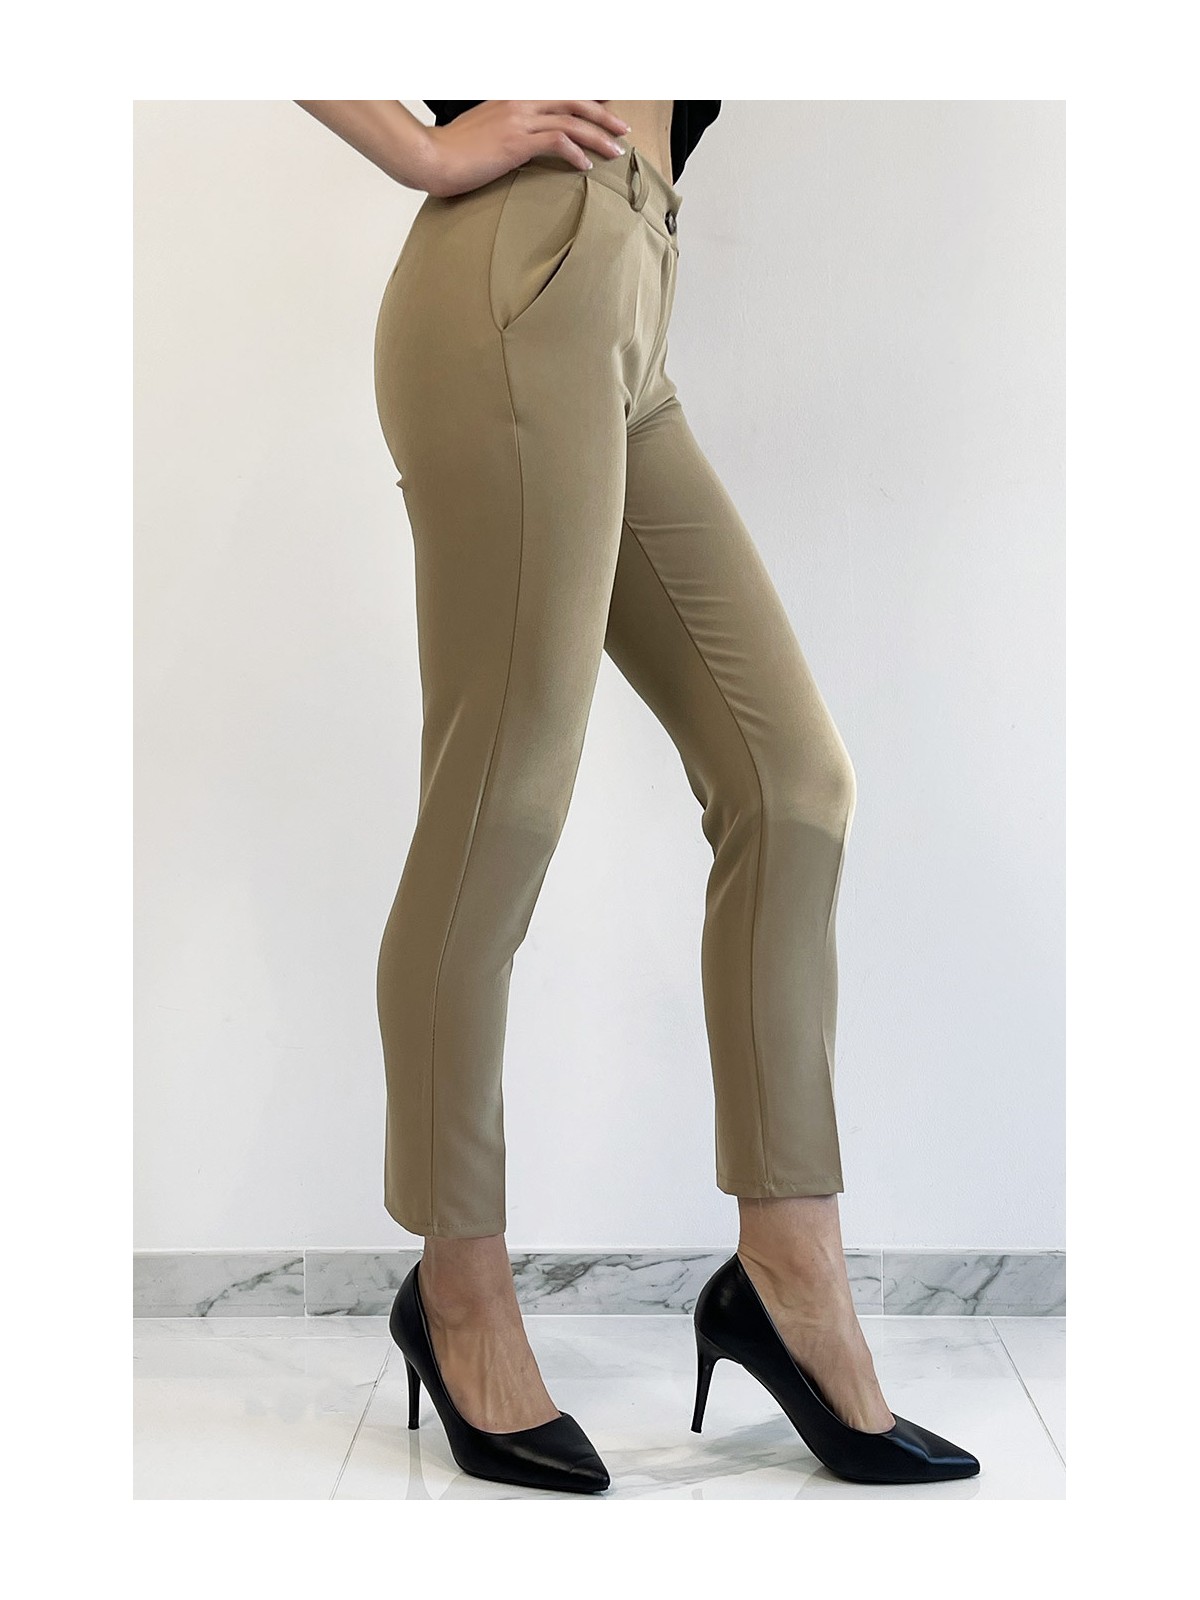 Pantalon slim camel avec poches style working girl - 5